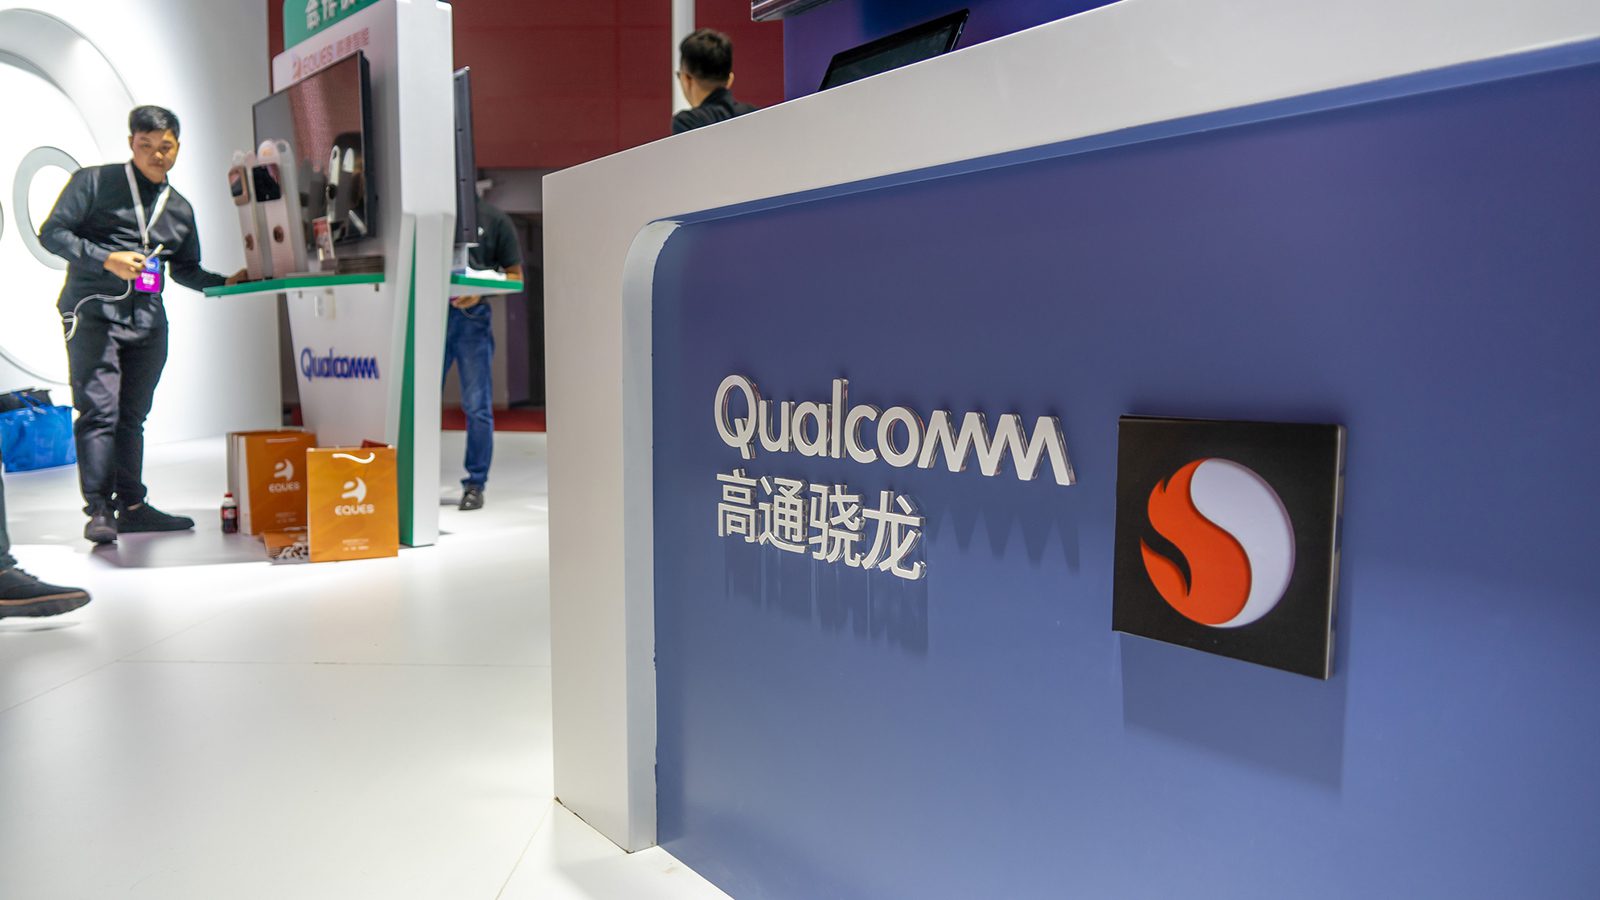 Qualcomm sets to unveil a new generation of Snapdragon mobile platform on Dec 1